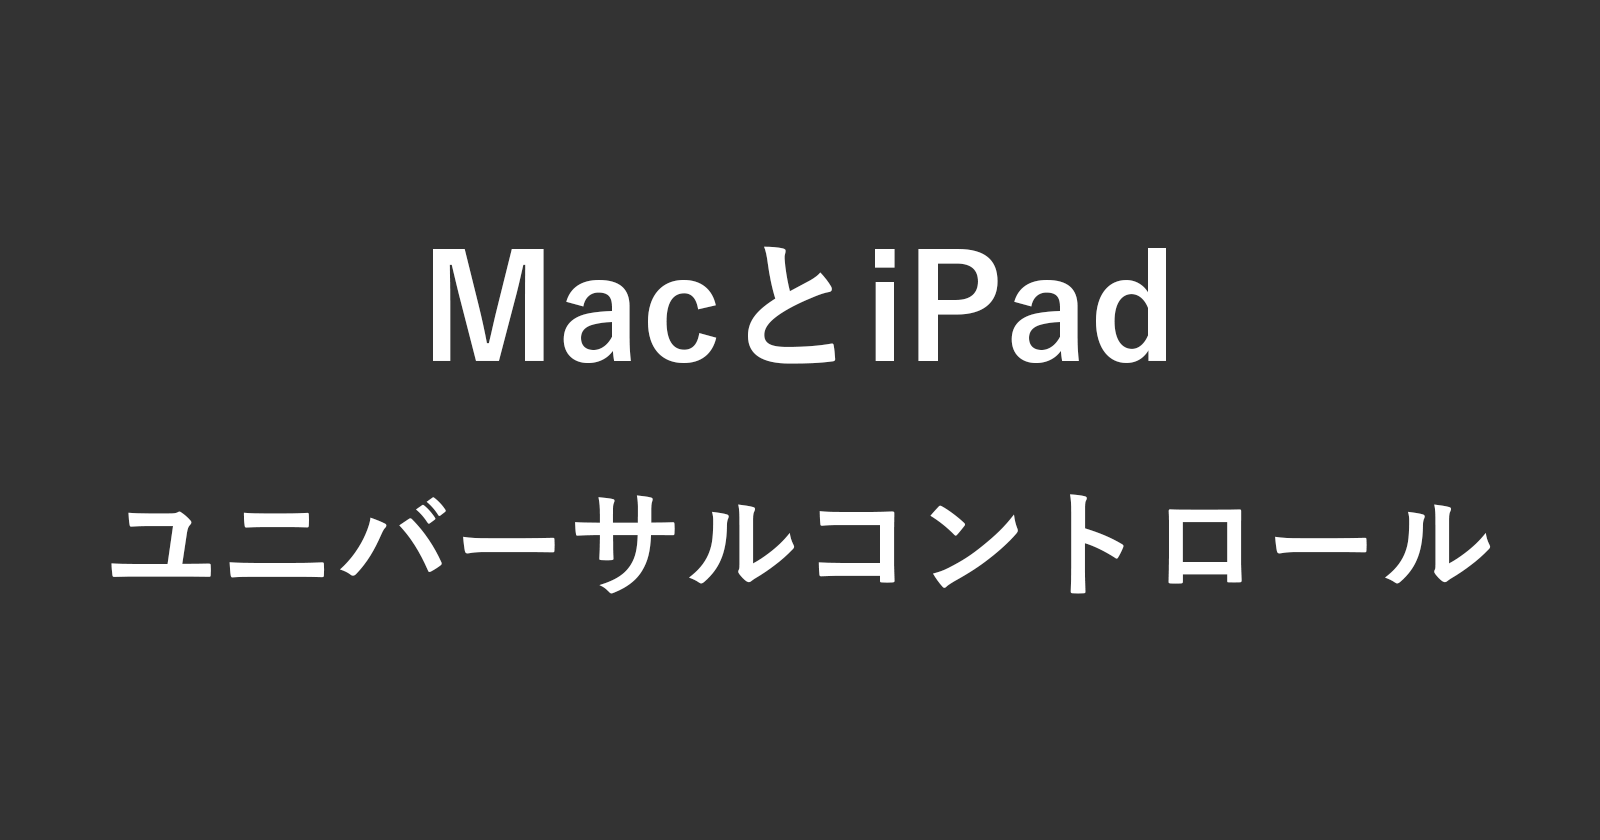 mac ipad universal control